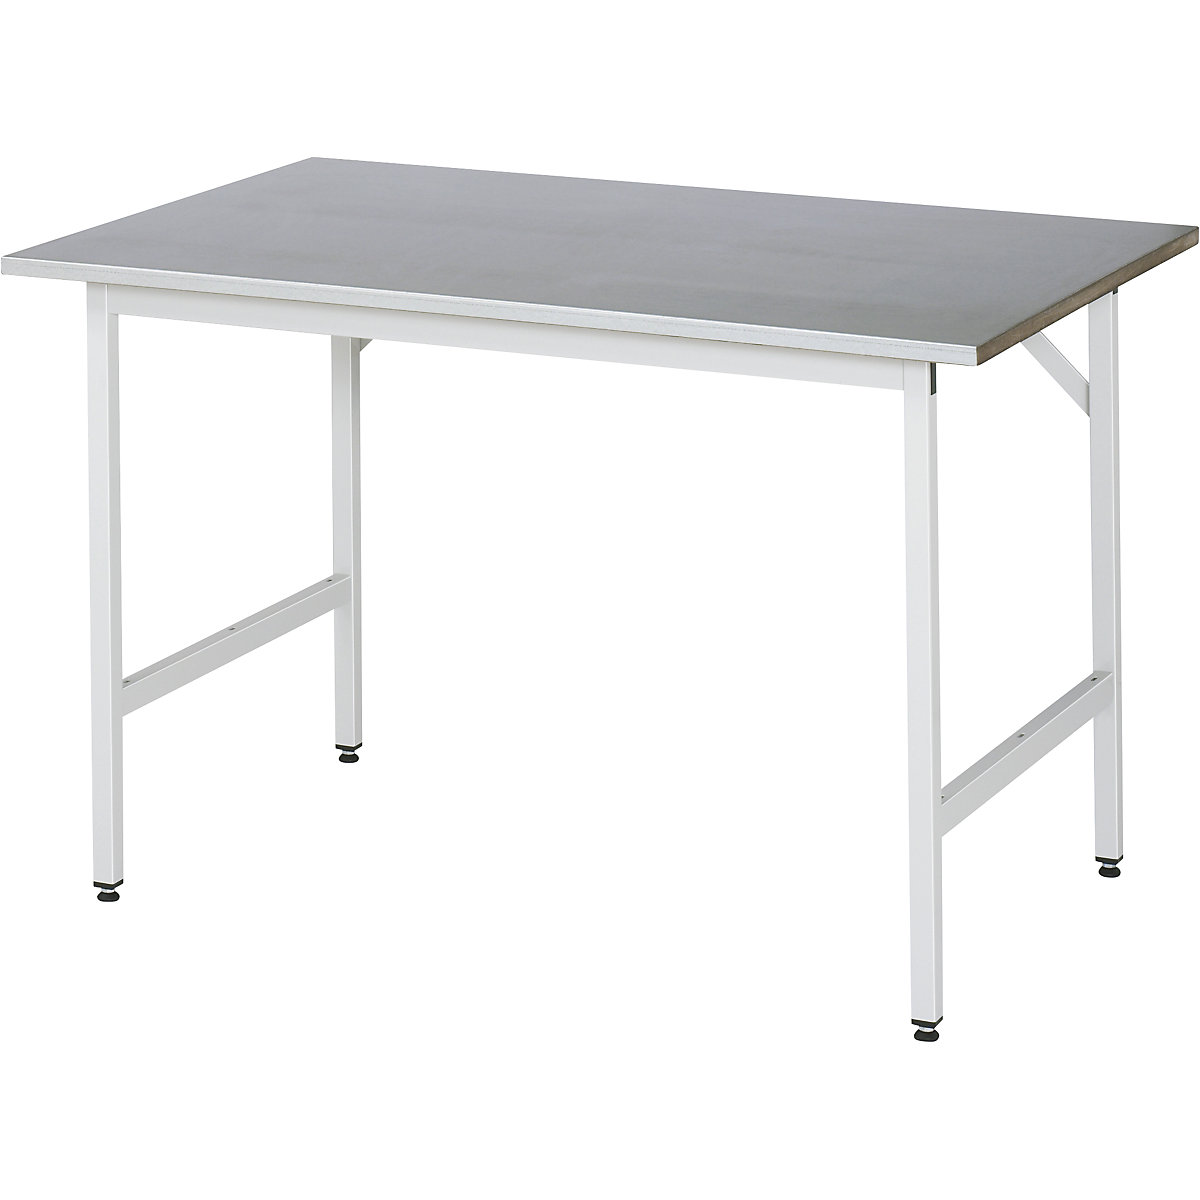 Rau Work Table Height Adjustable 800 850 Mm Steel Covered Worktop Kaiser Kraft International - How Height Adjustable Table Works